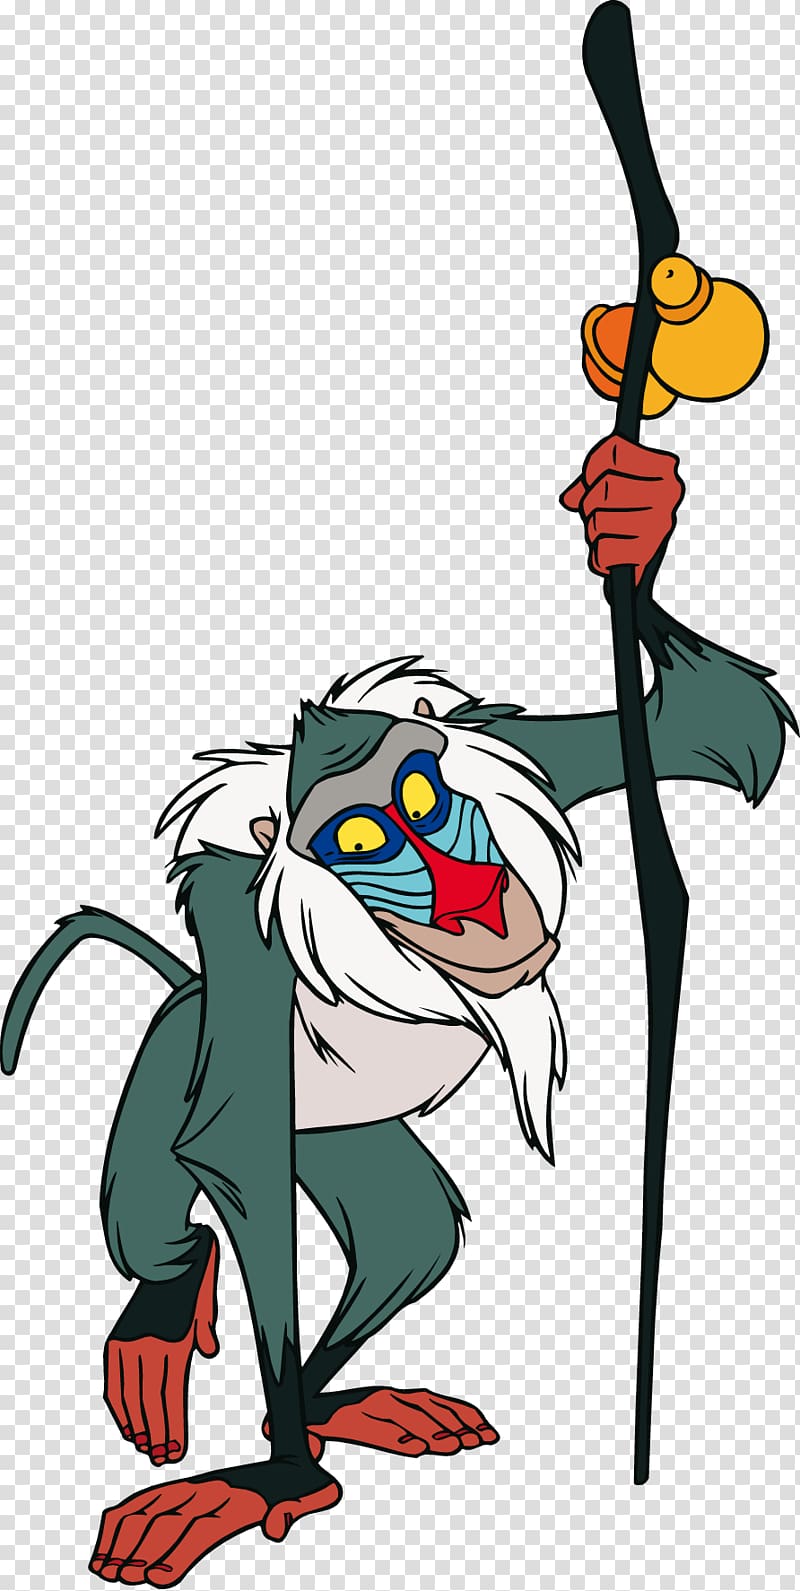 Monkey character illustration.